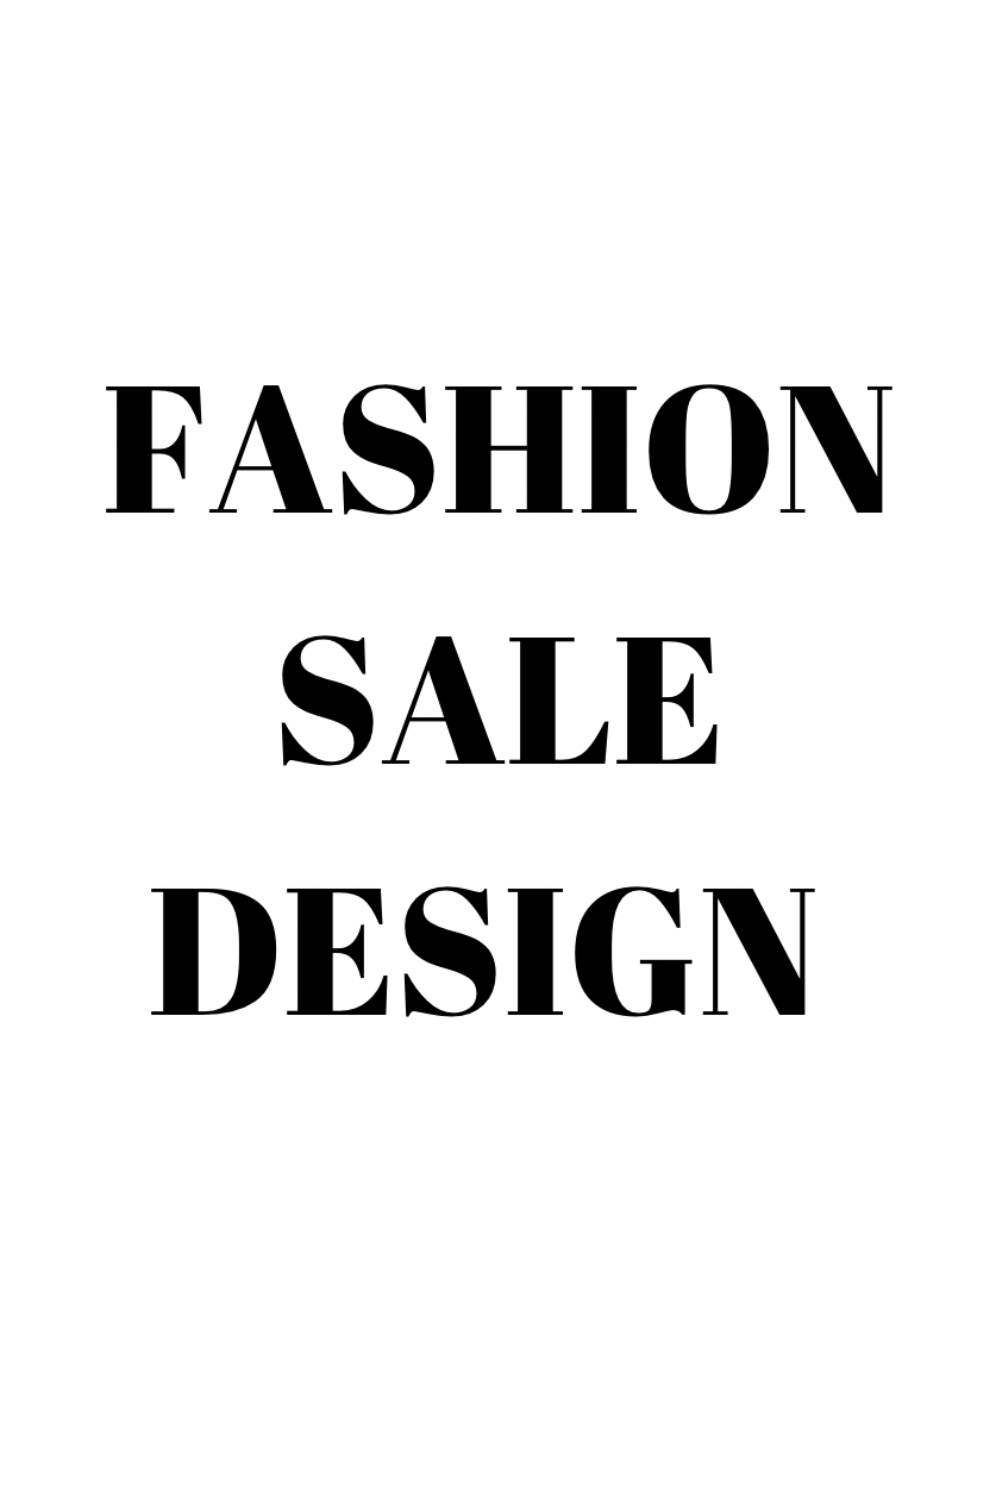 Fashion sale design for social media/ instagram post template pinterest preview image.